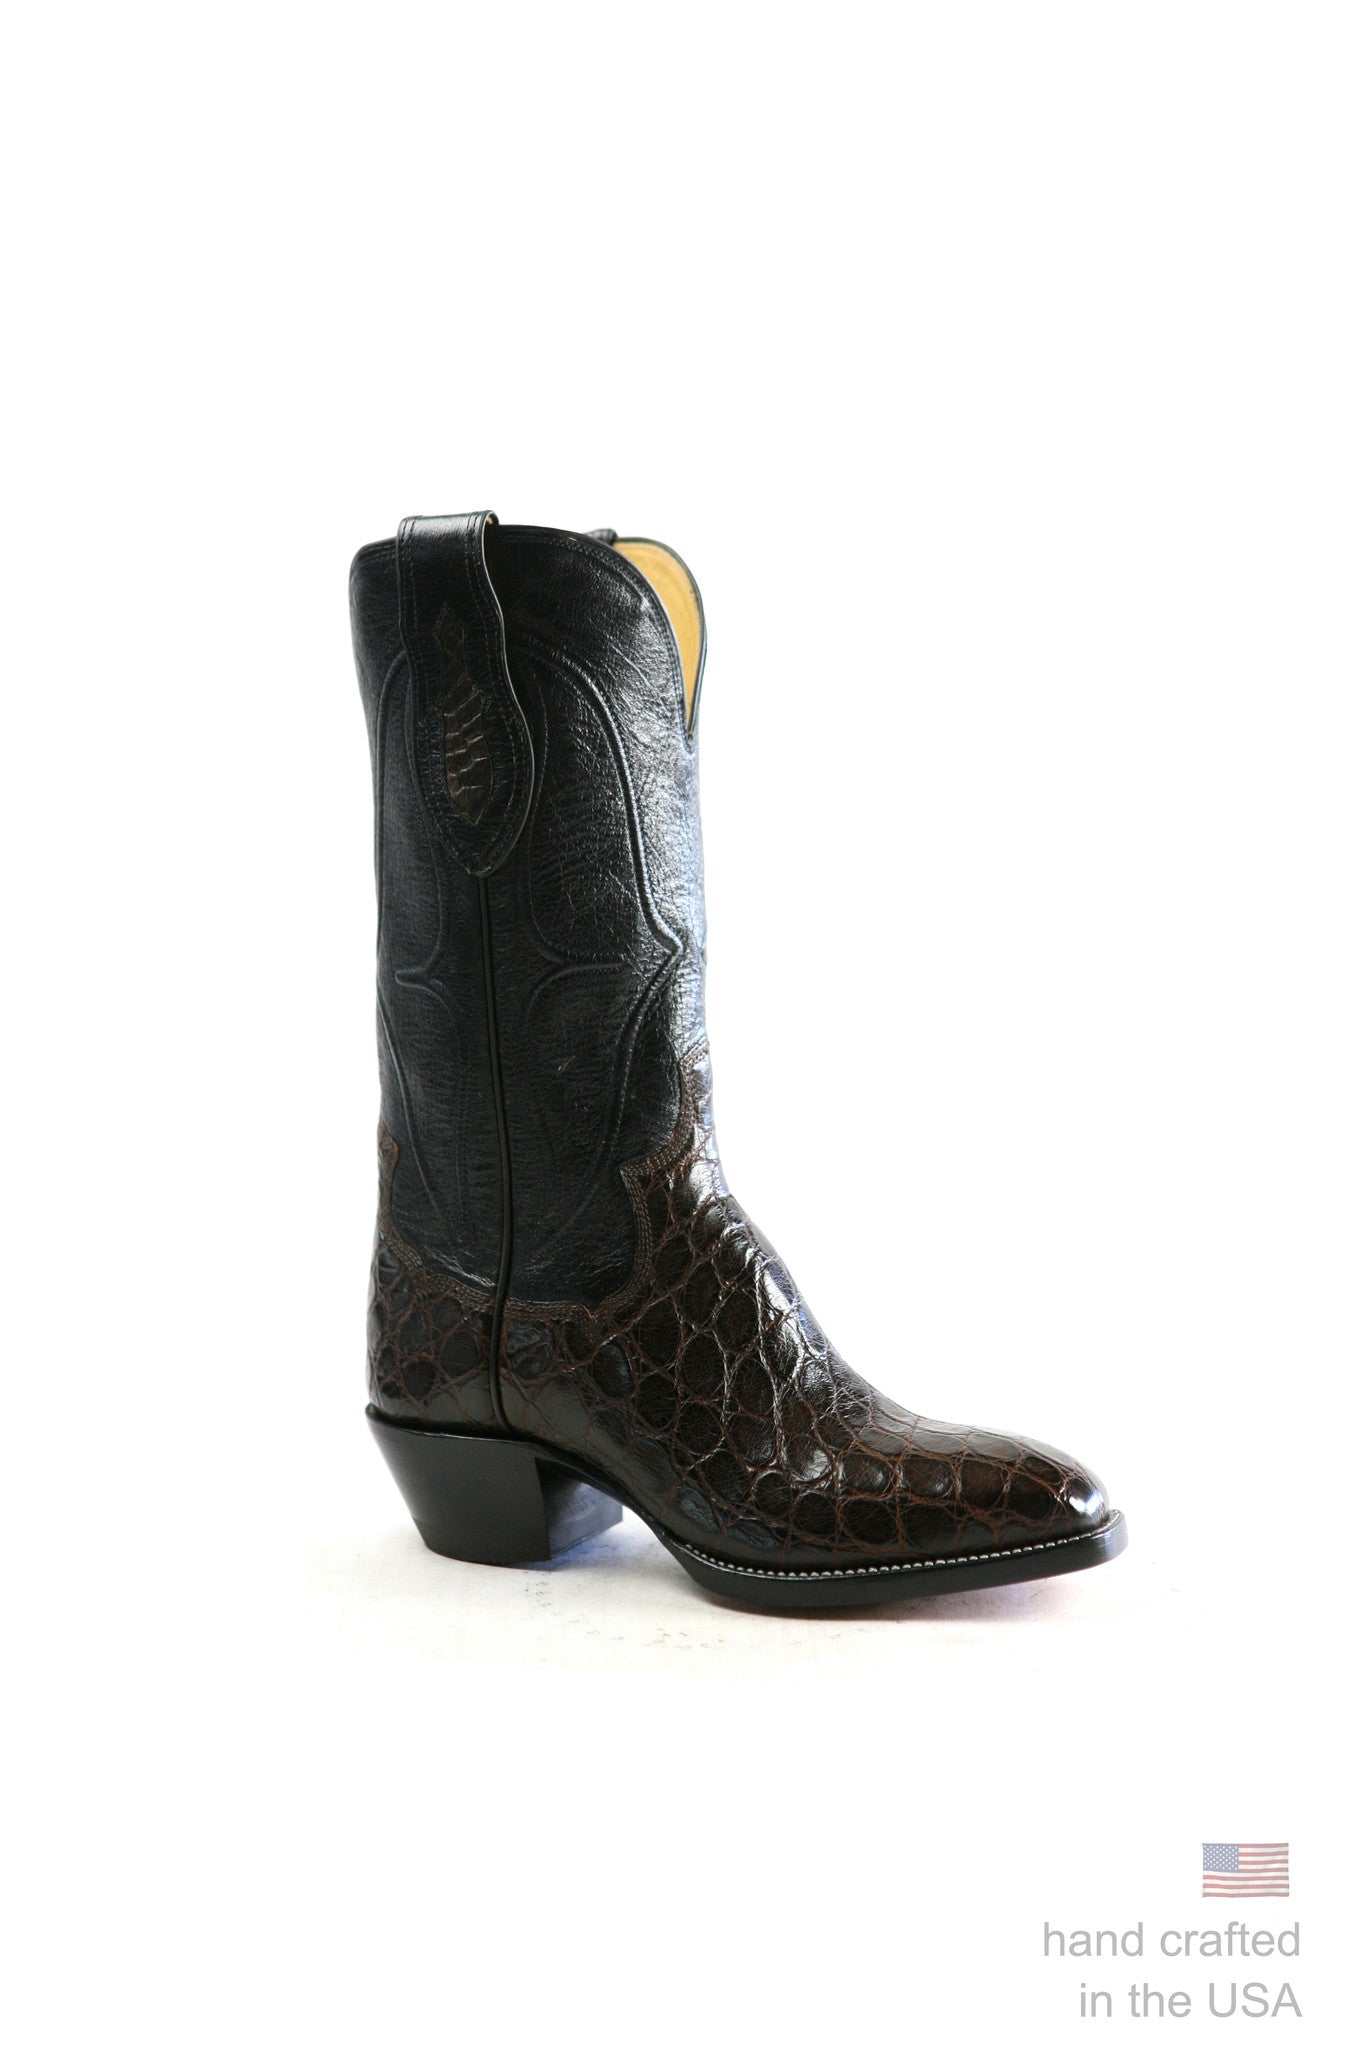 American Alligator Cowboy Boot: Size 10 D